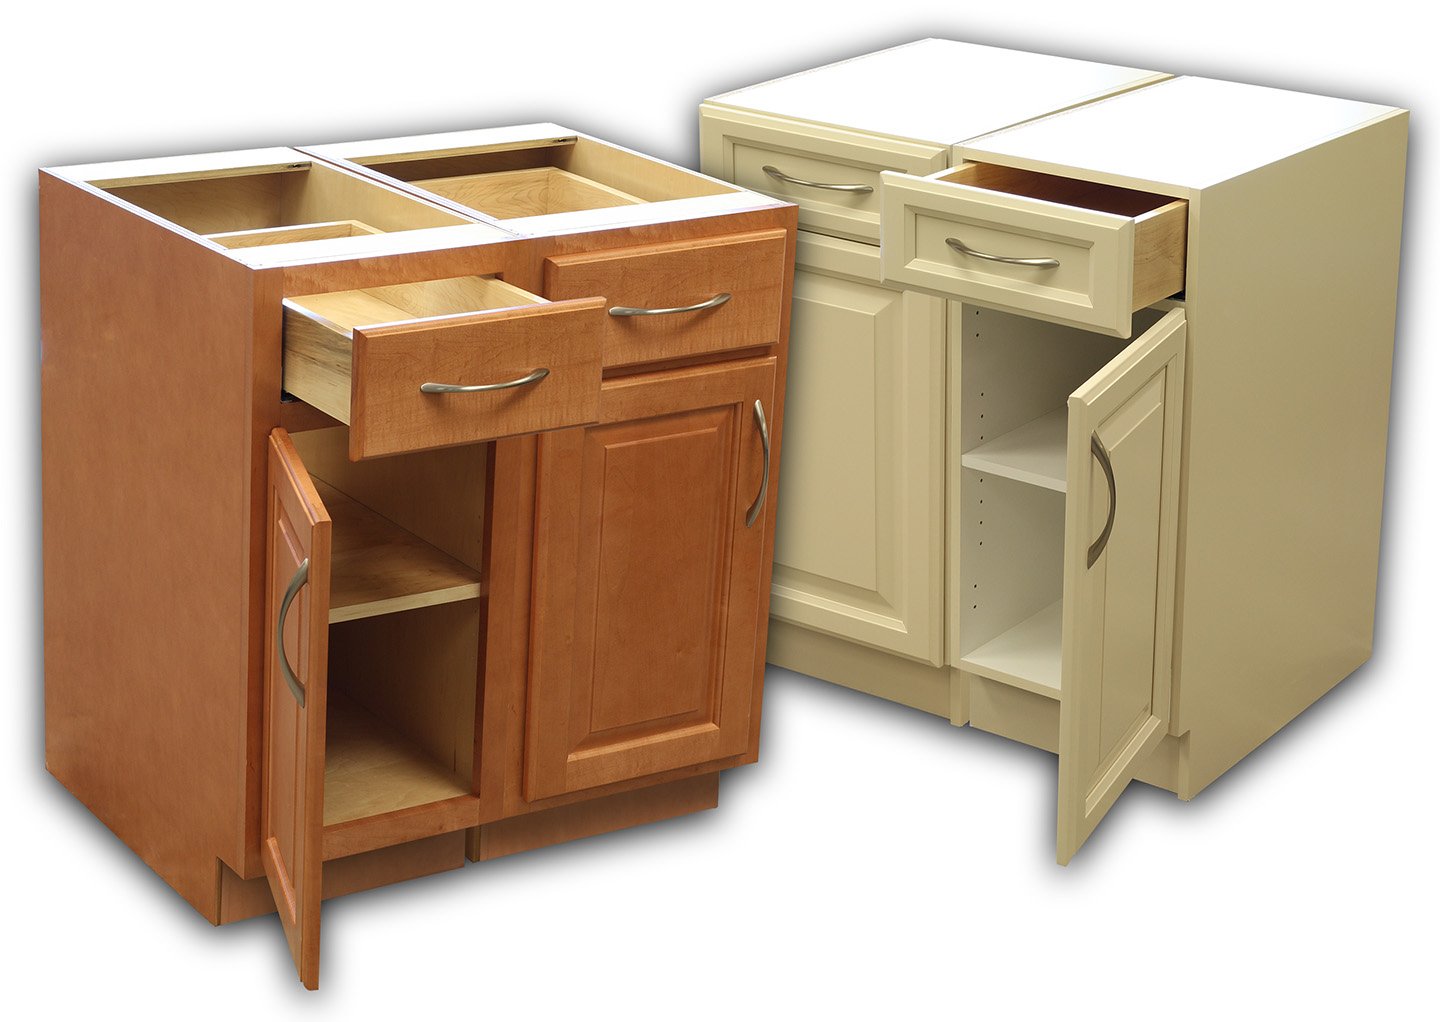 Custom RTA Cabinet Boxes